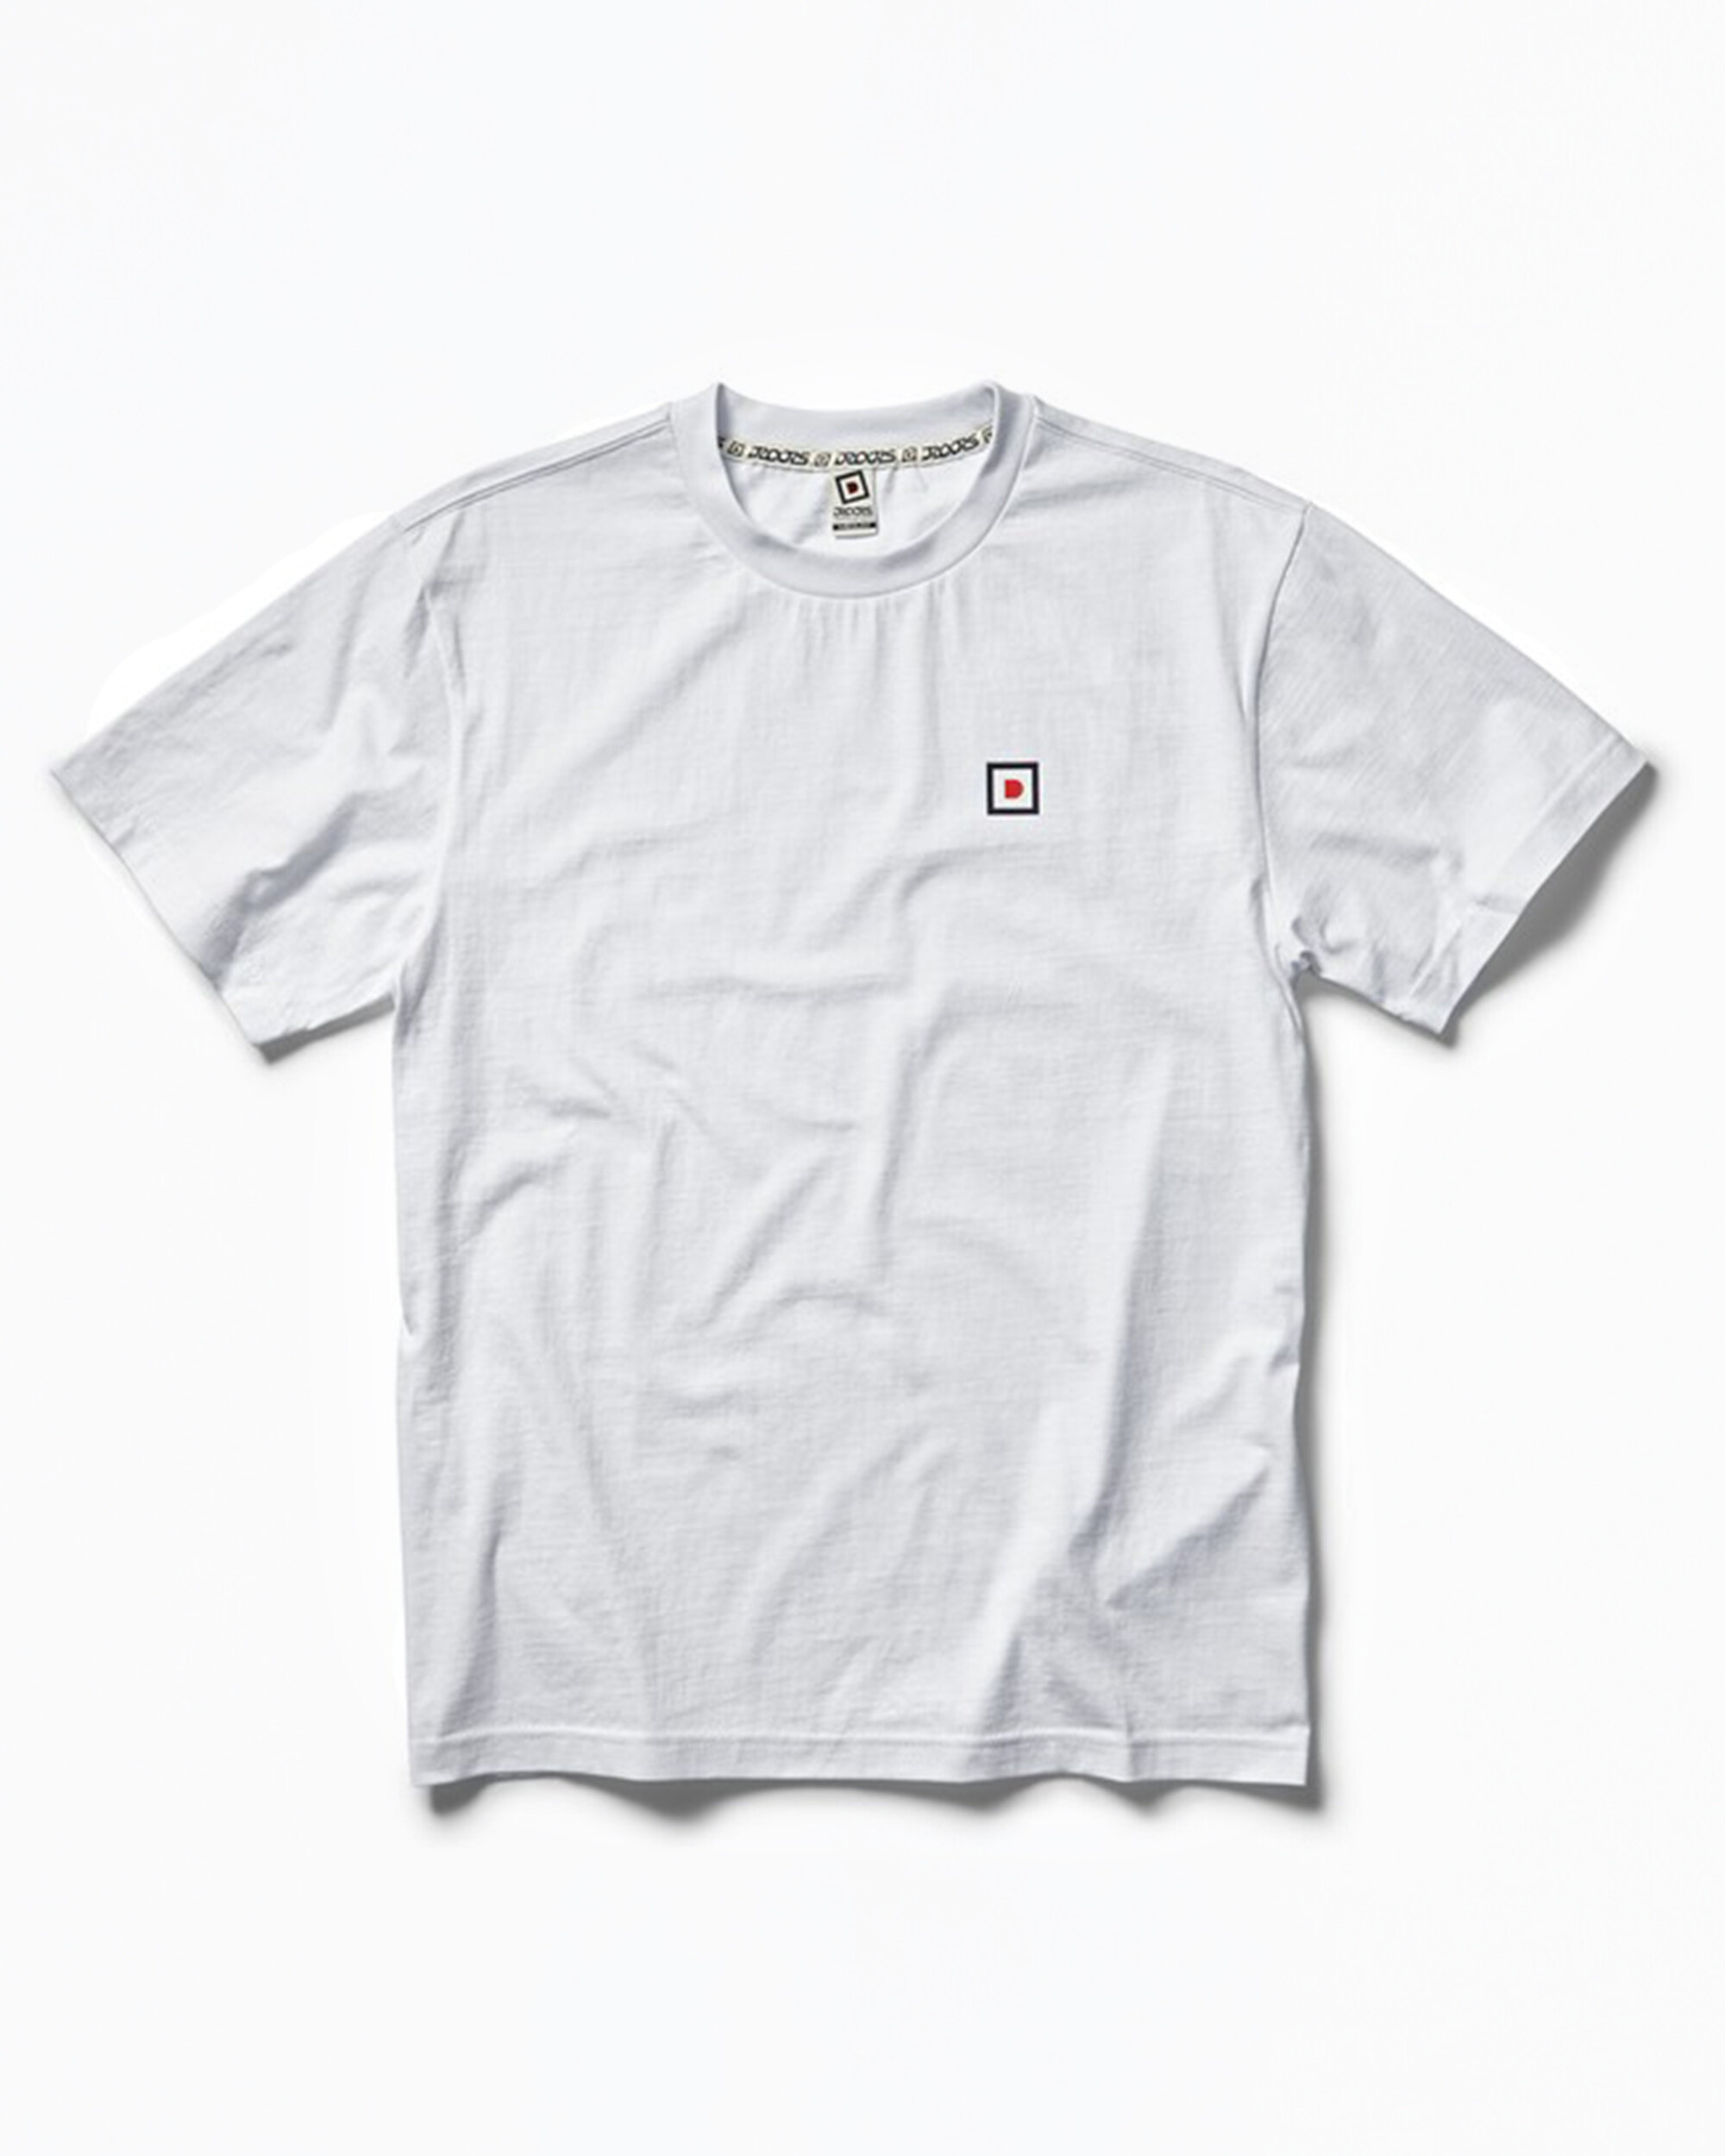 DROORS Basketbal T-Shirt White